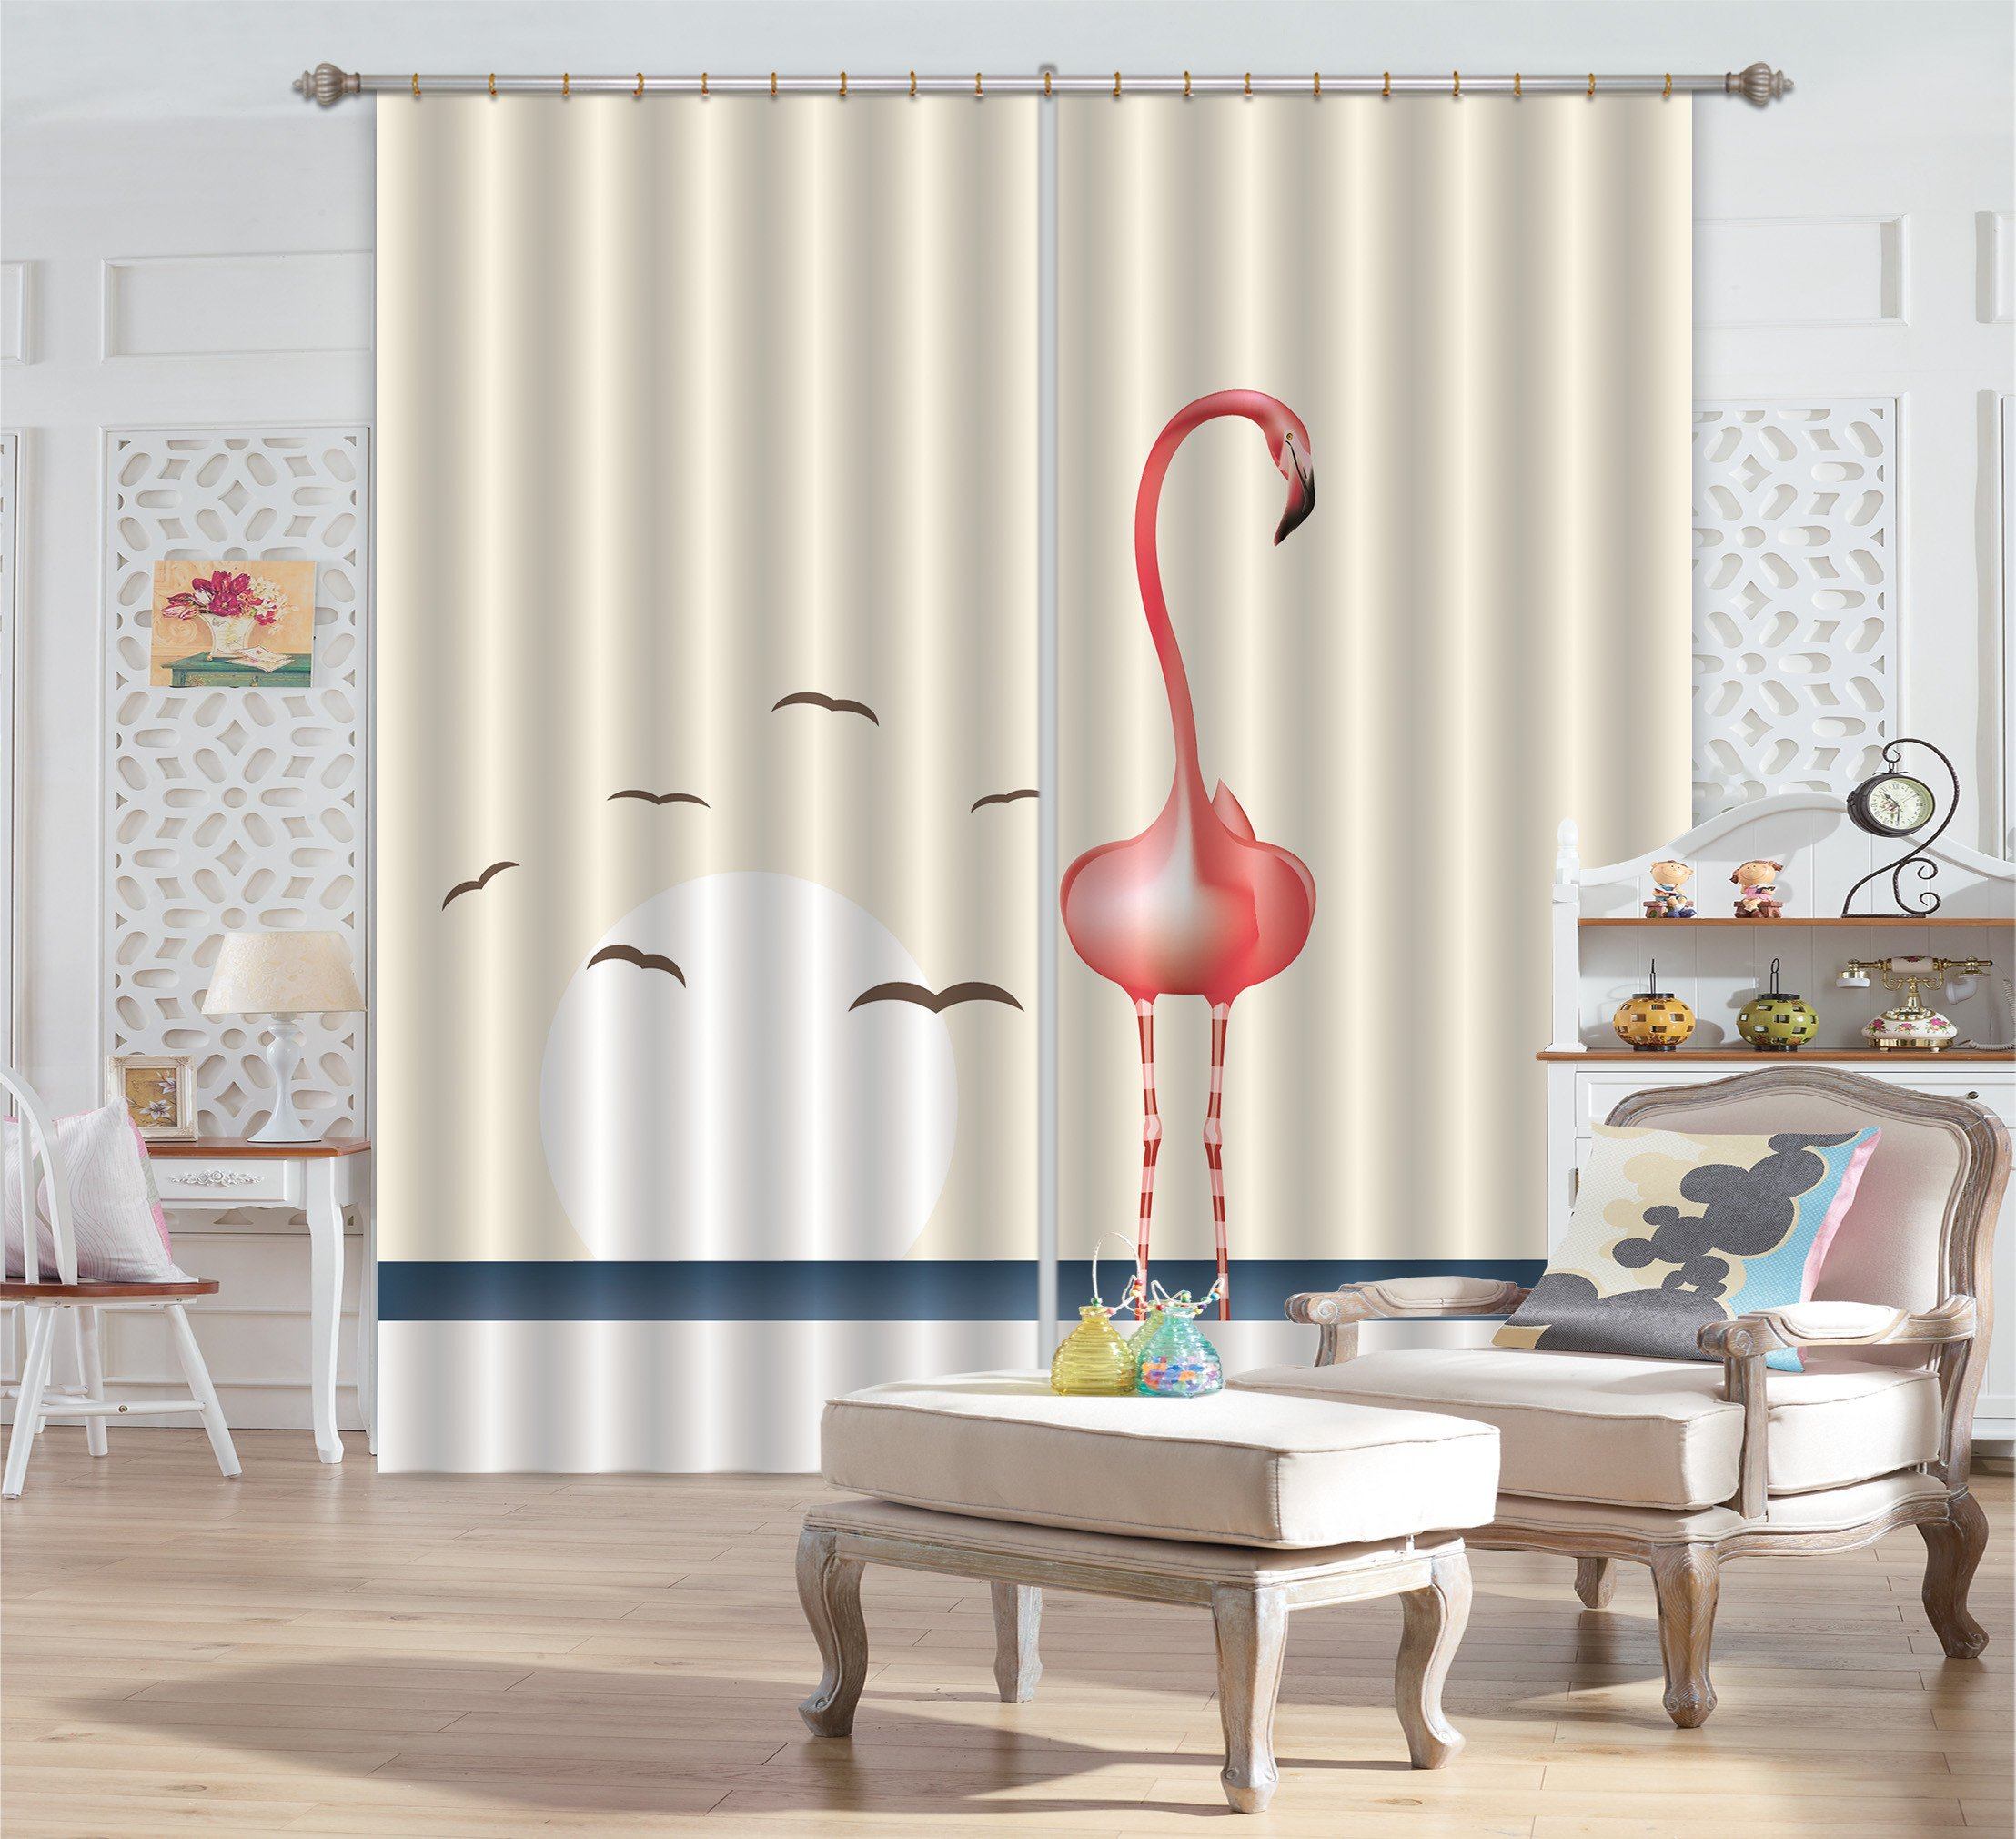 3D Birds Pattern 669 Curtains Drapes Wallpaper AJ Wallpaper 